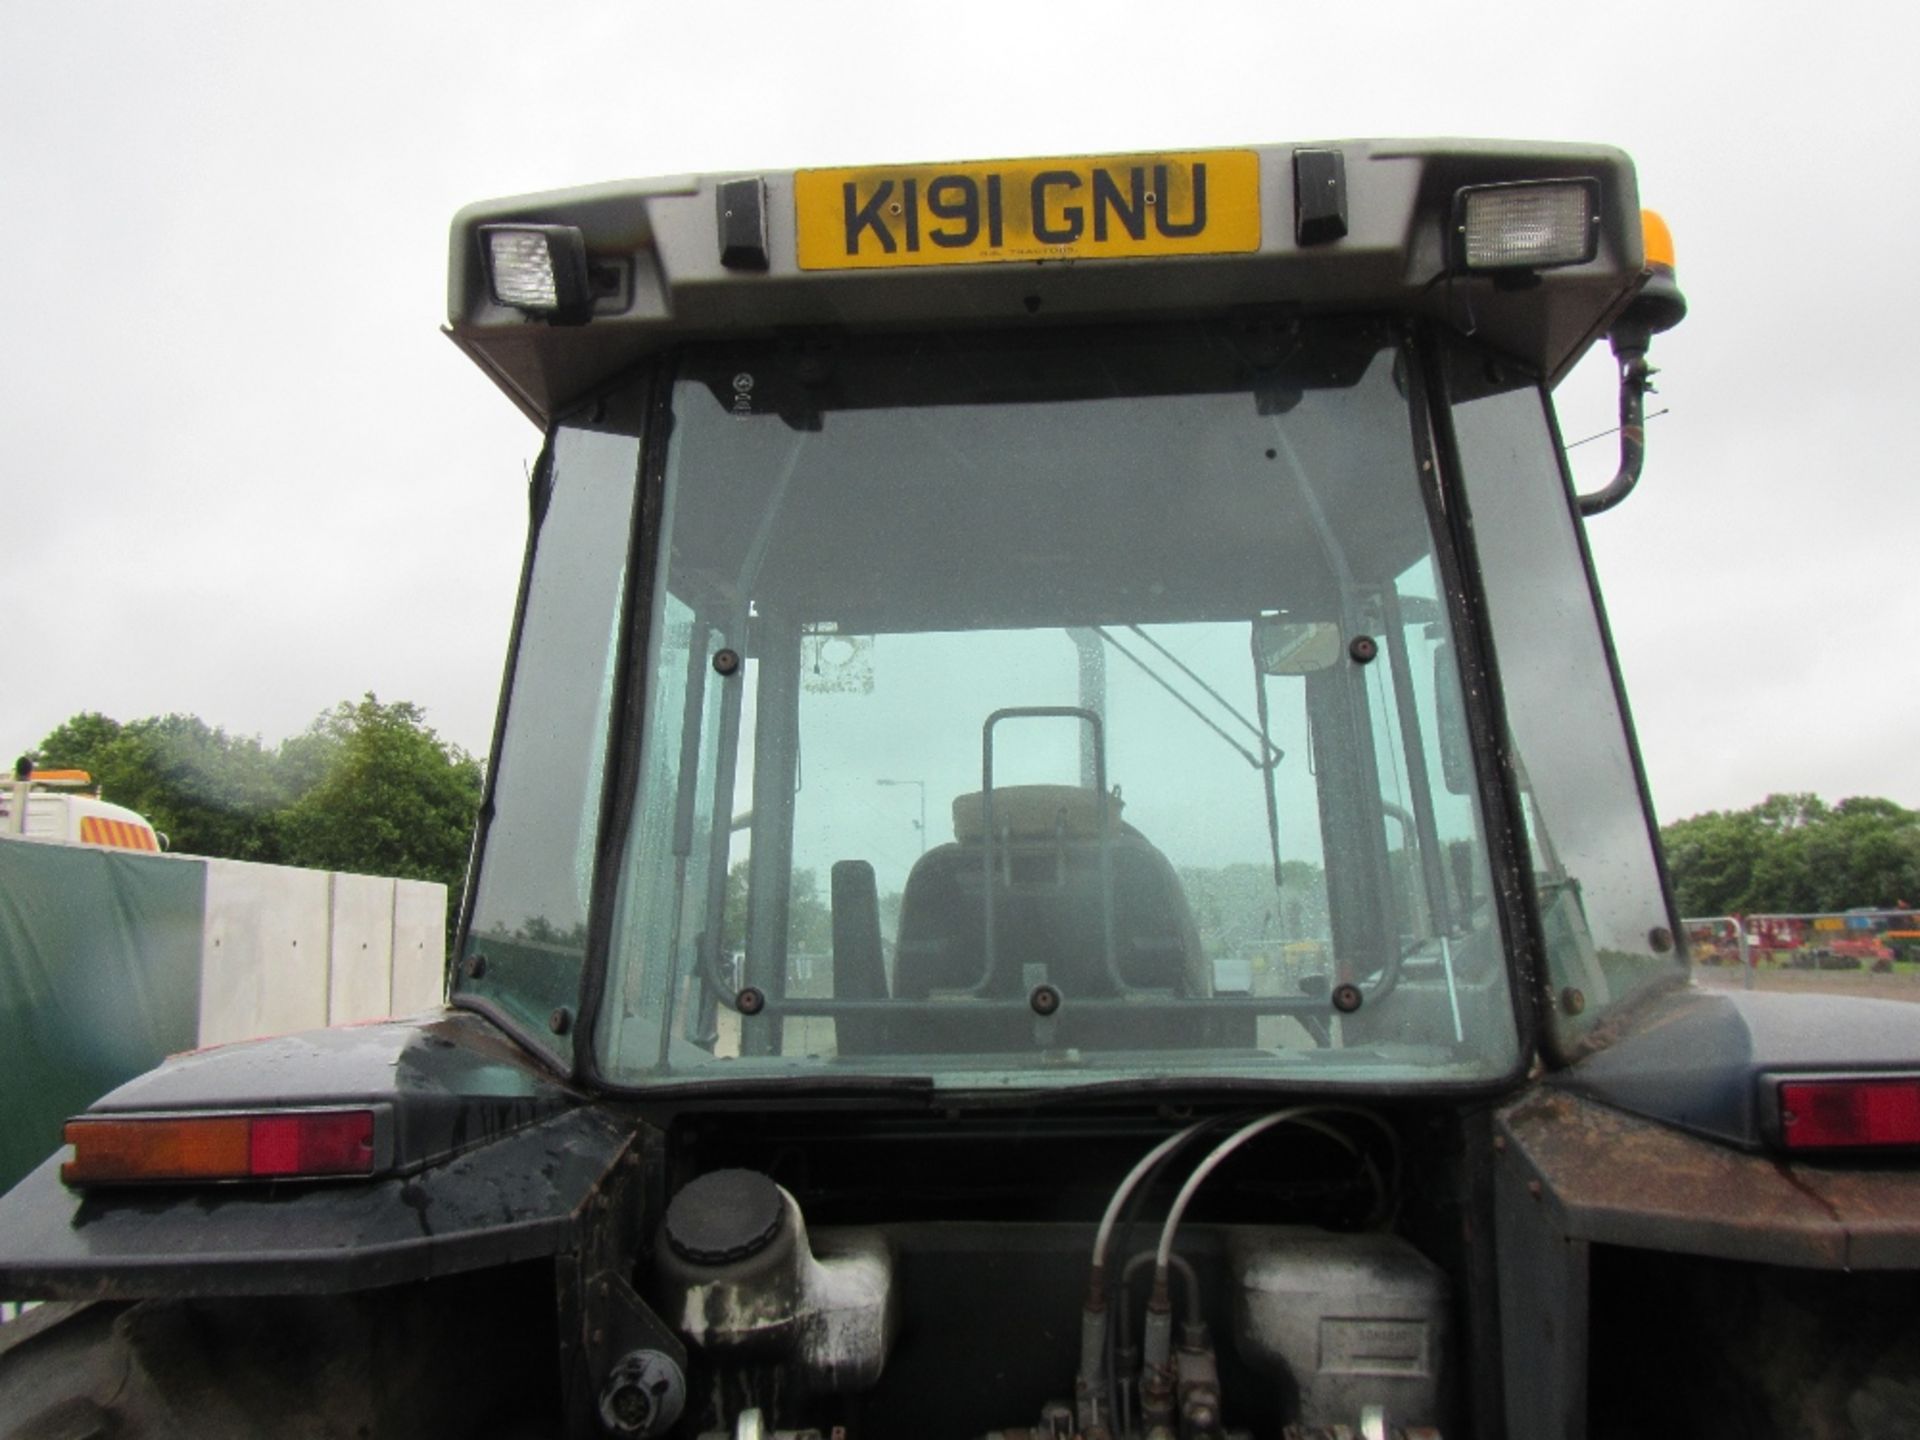 Massey Ferguson 3095 4wd Tractor Reg. No. K191 GNU - Image 8 of 16